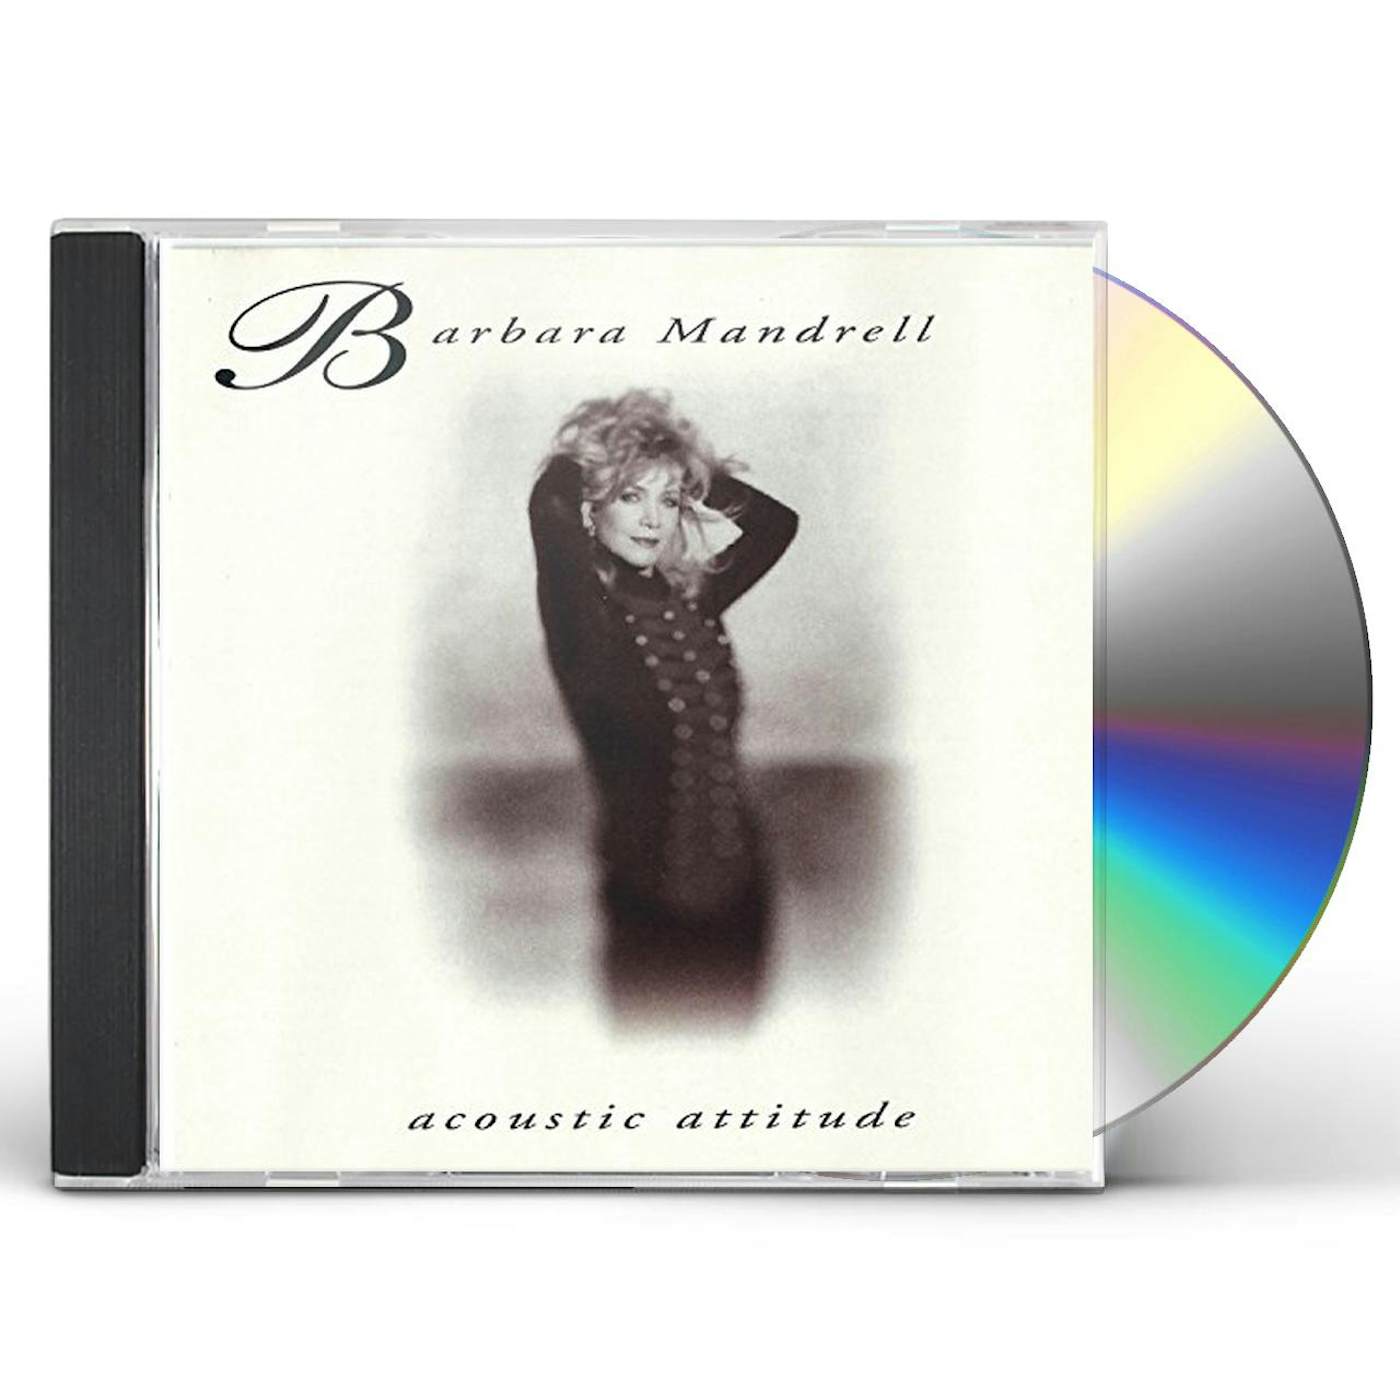 Barbara Mandrell ACOUSTIC ATTITUDE CD